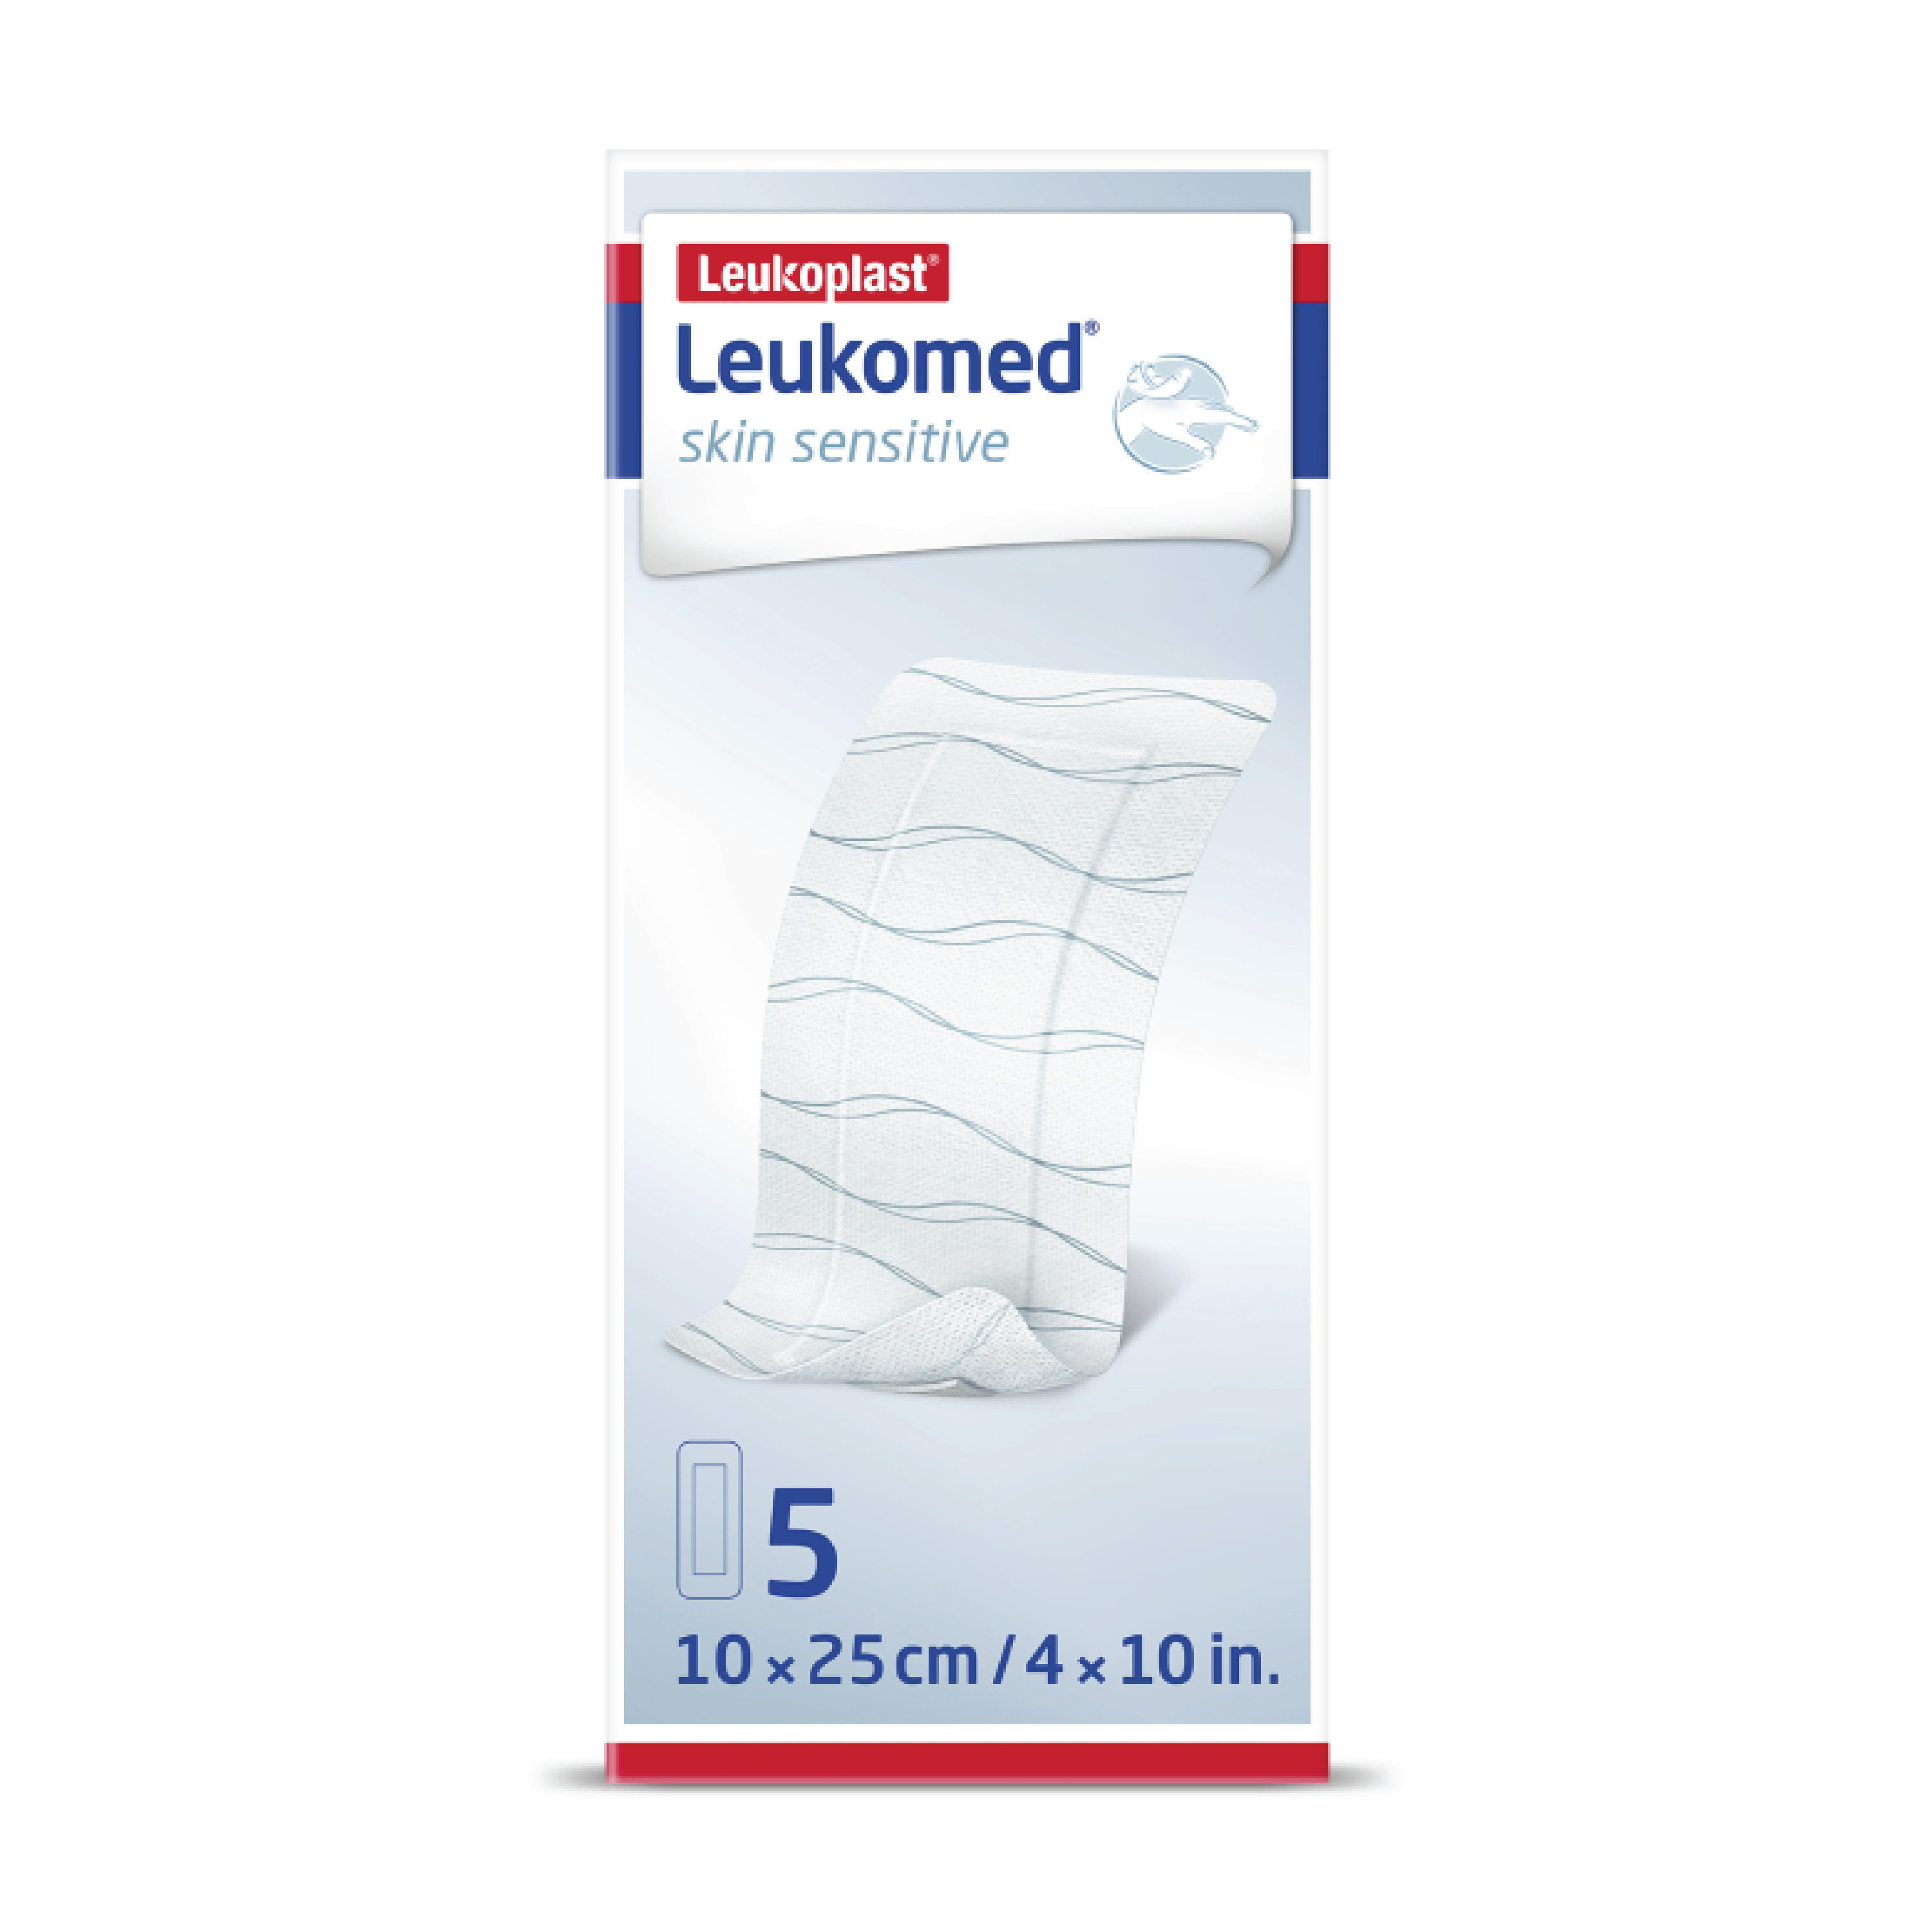 Leukoplast Leukomed Skin Sensitive Sårbandasje, 10x25 cm, 5 stk.